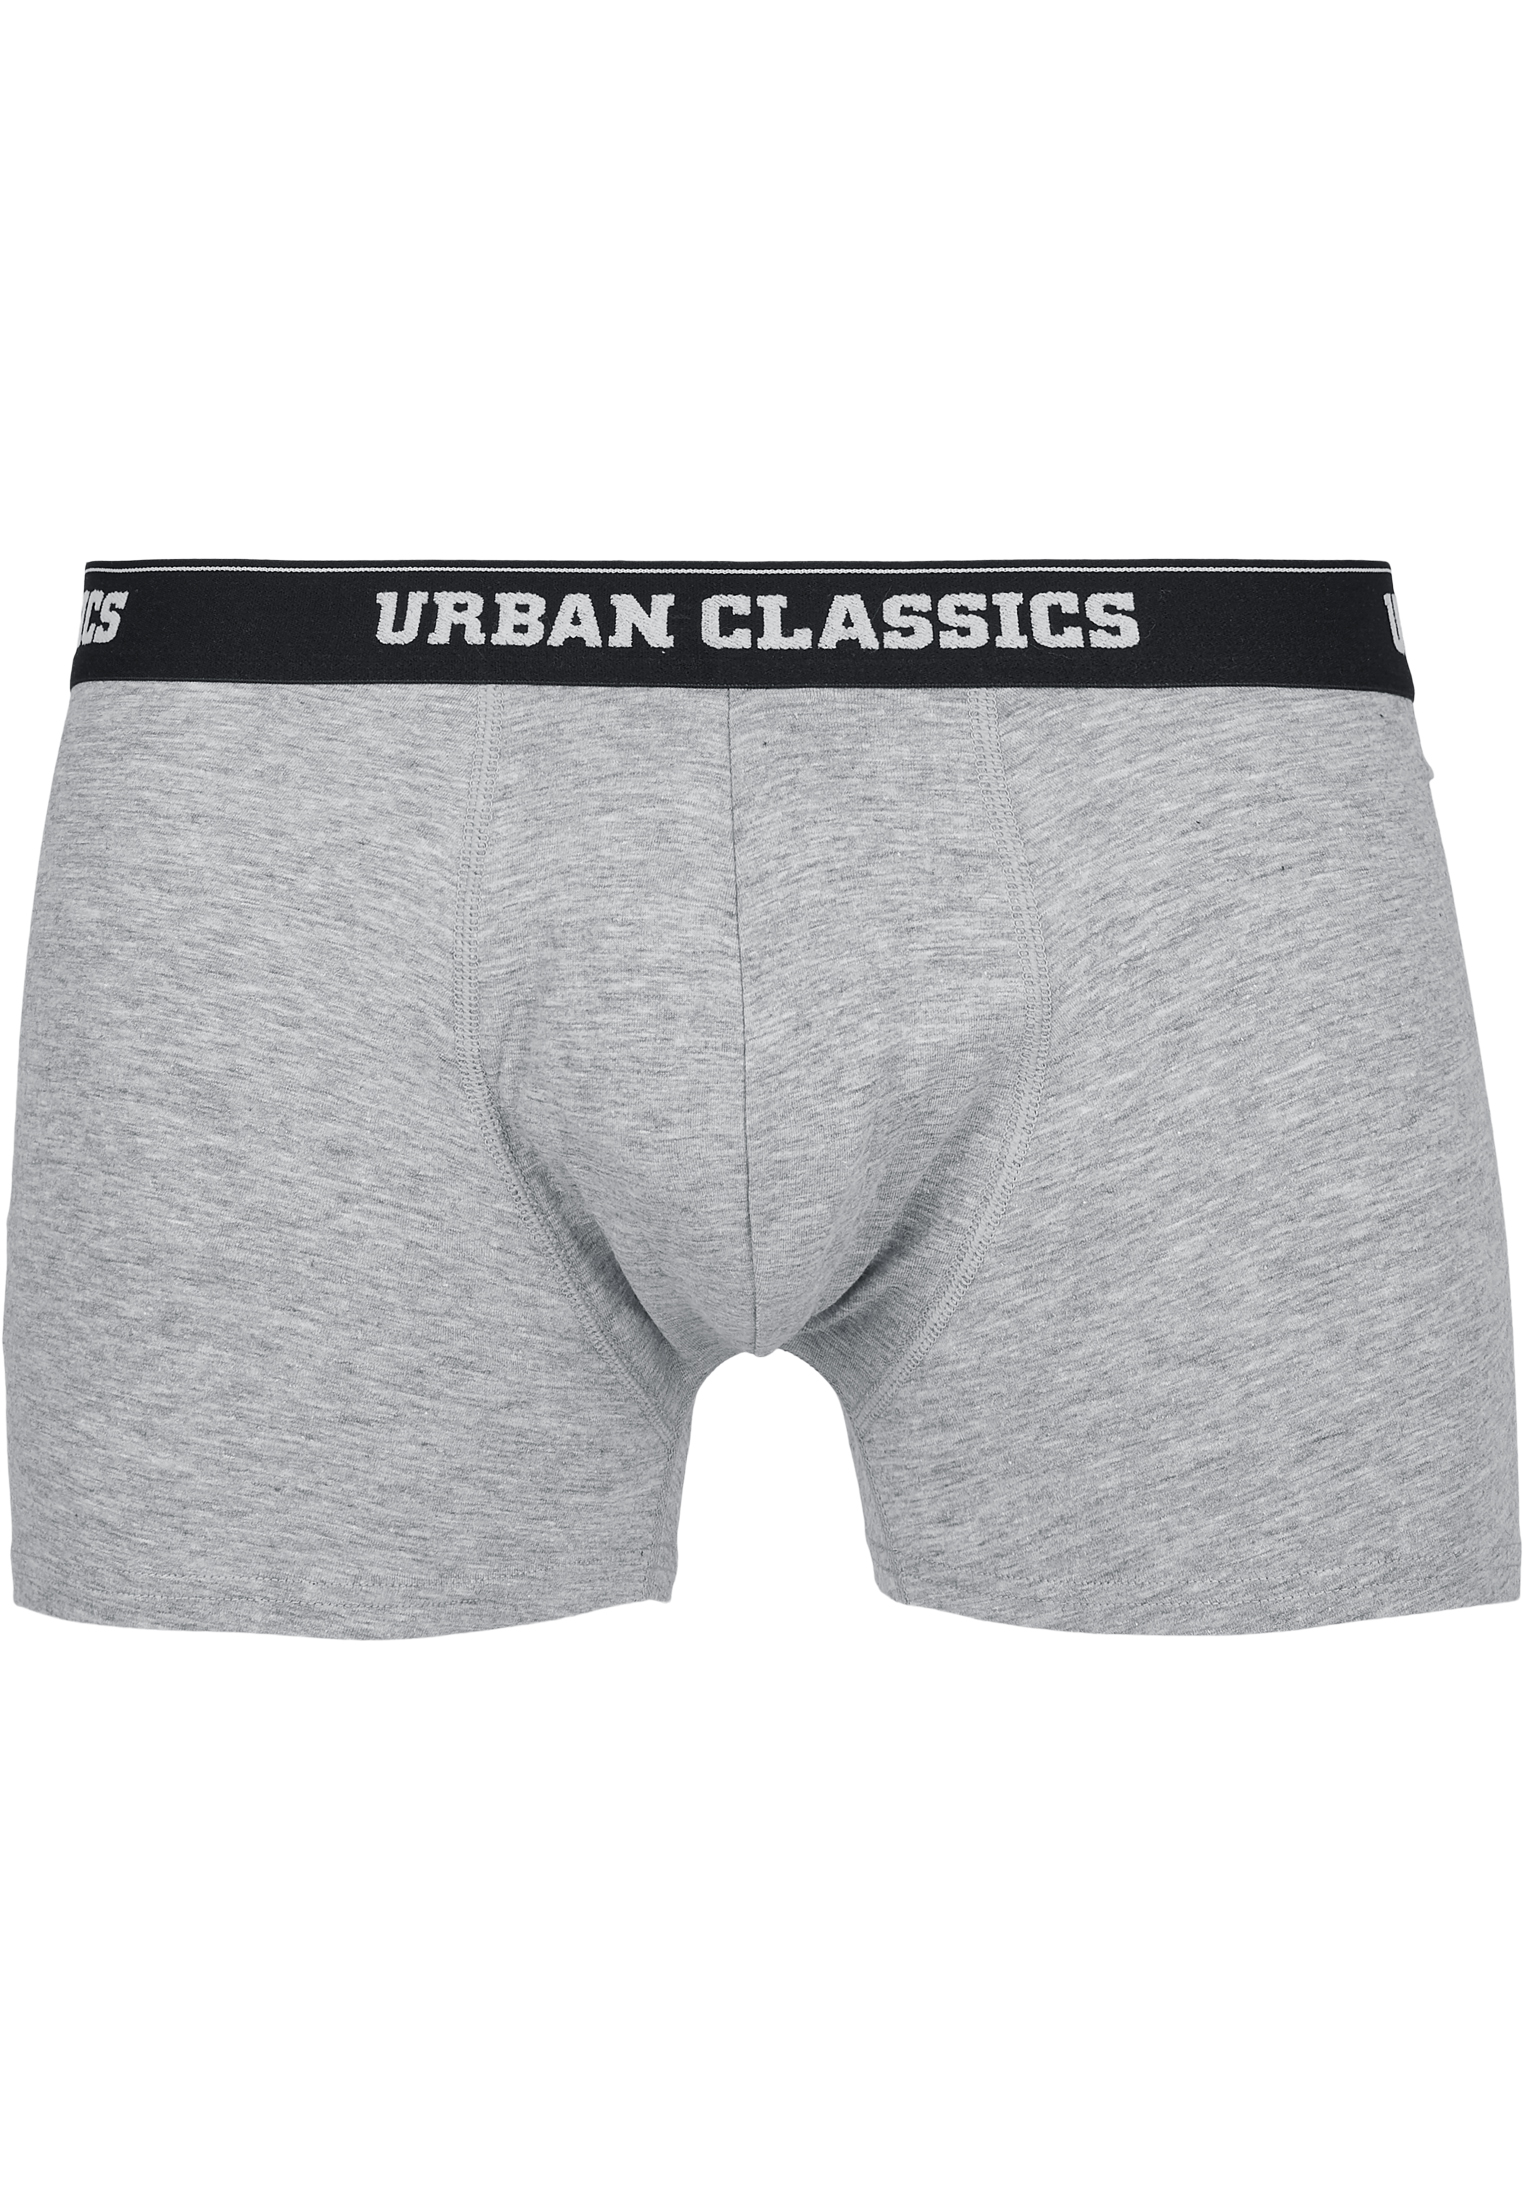 Underwear Boxer Shorts 3-Pack in Farbe wide stripe aop + grey + white